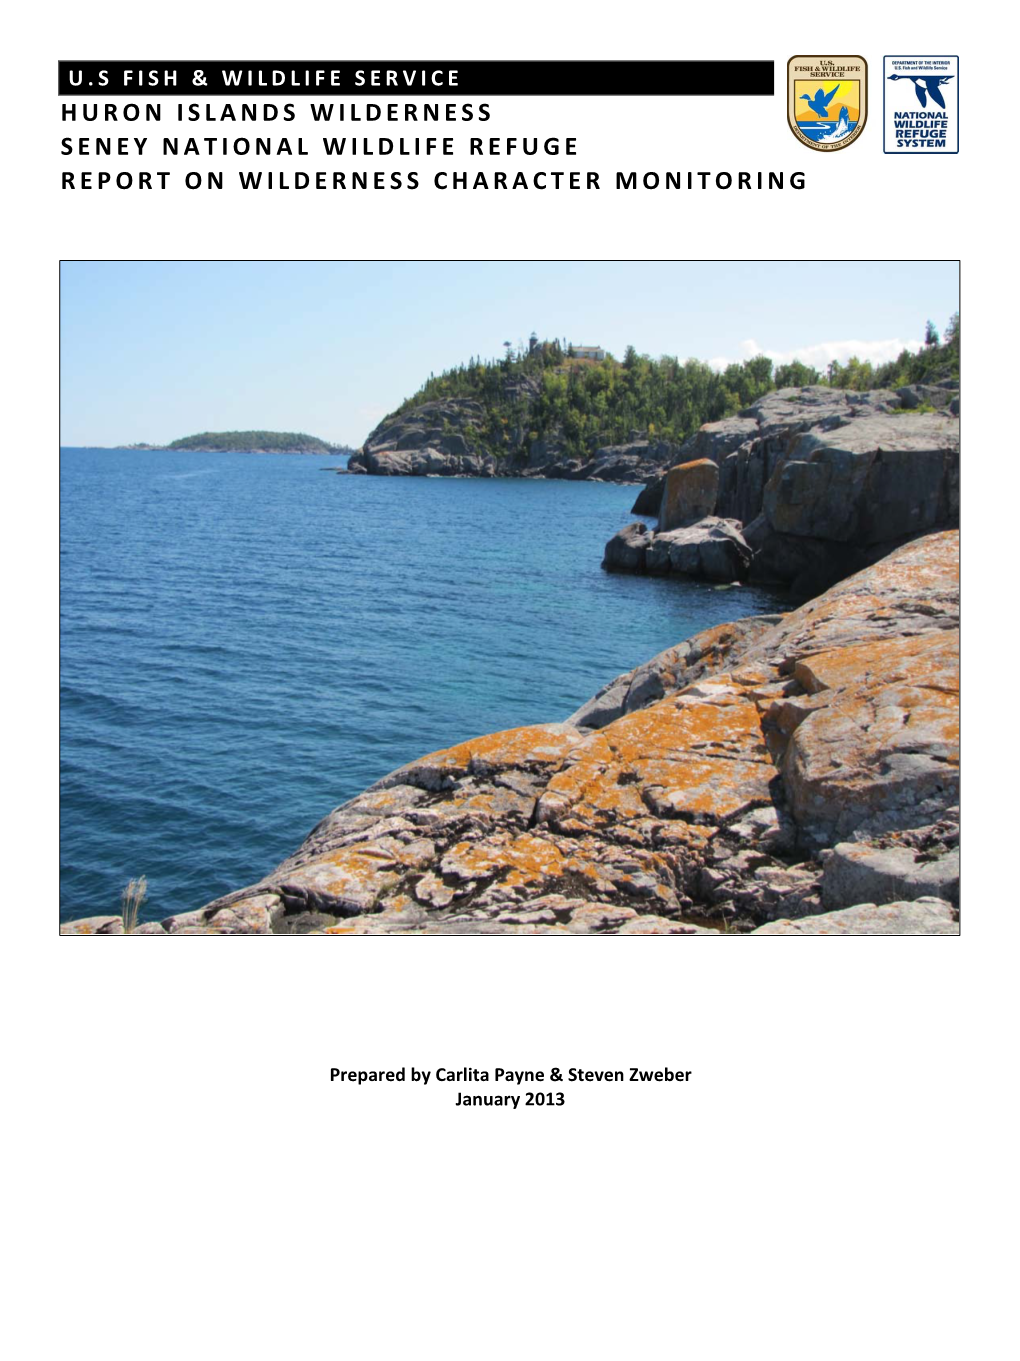 Huron Islands Wilderness, Seney National Wildlife Refuge Report on Wilderness Character Monitoring